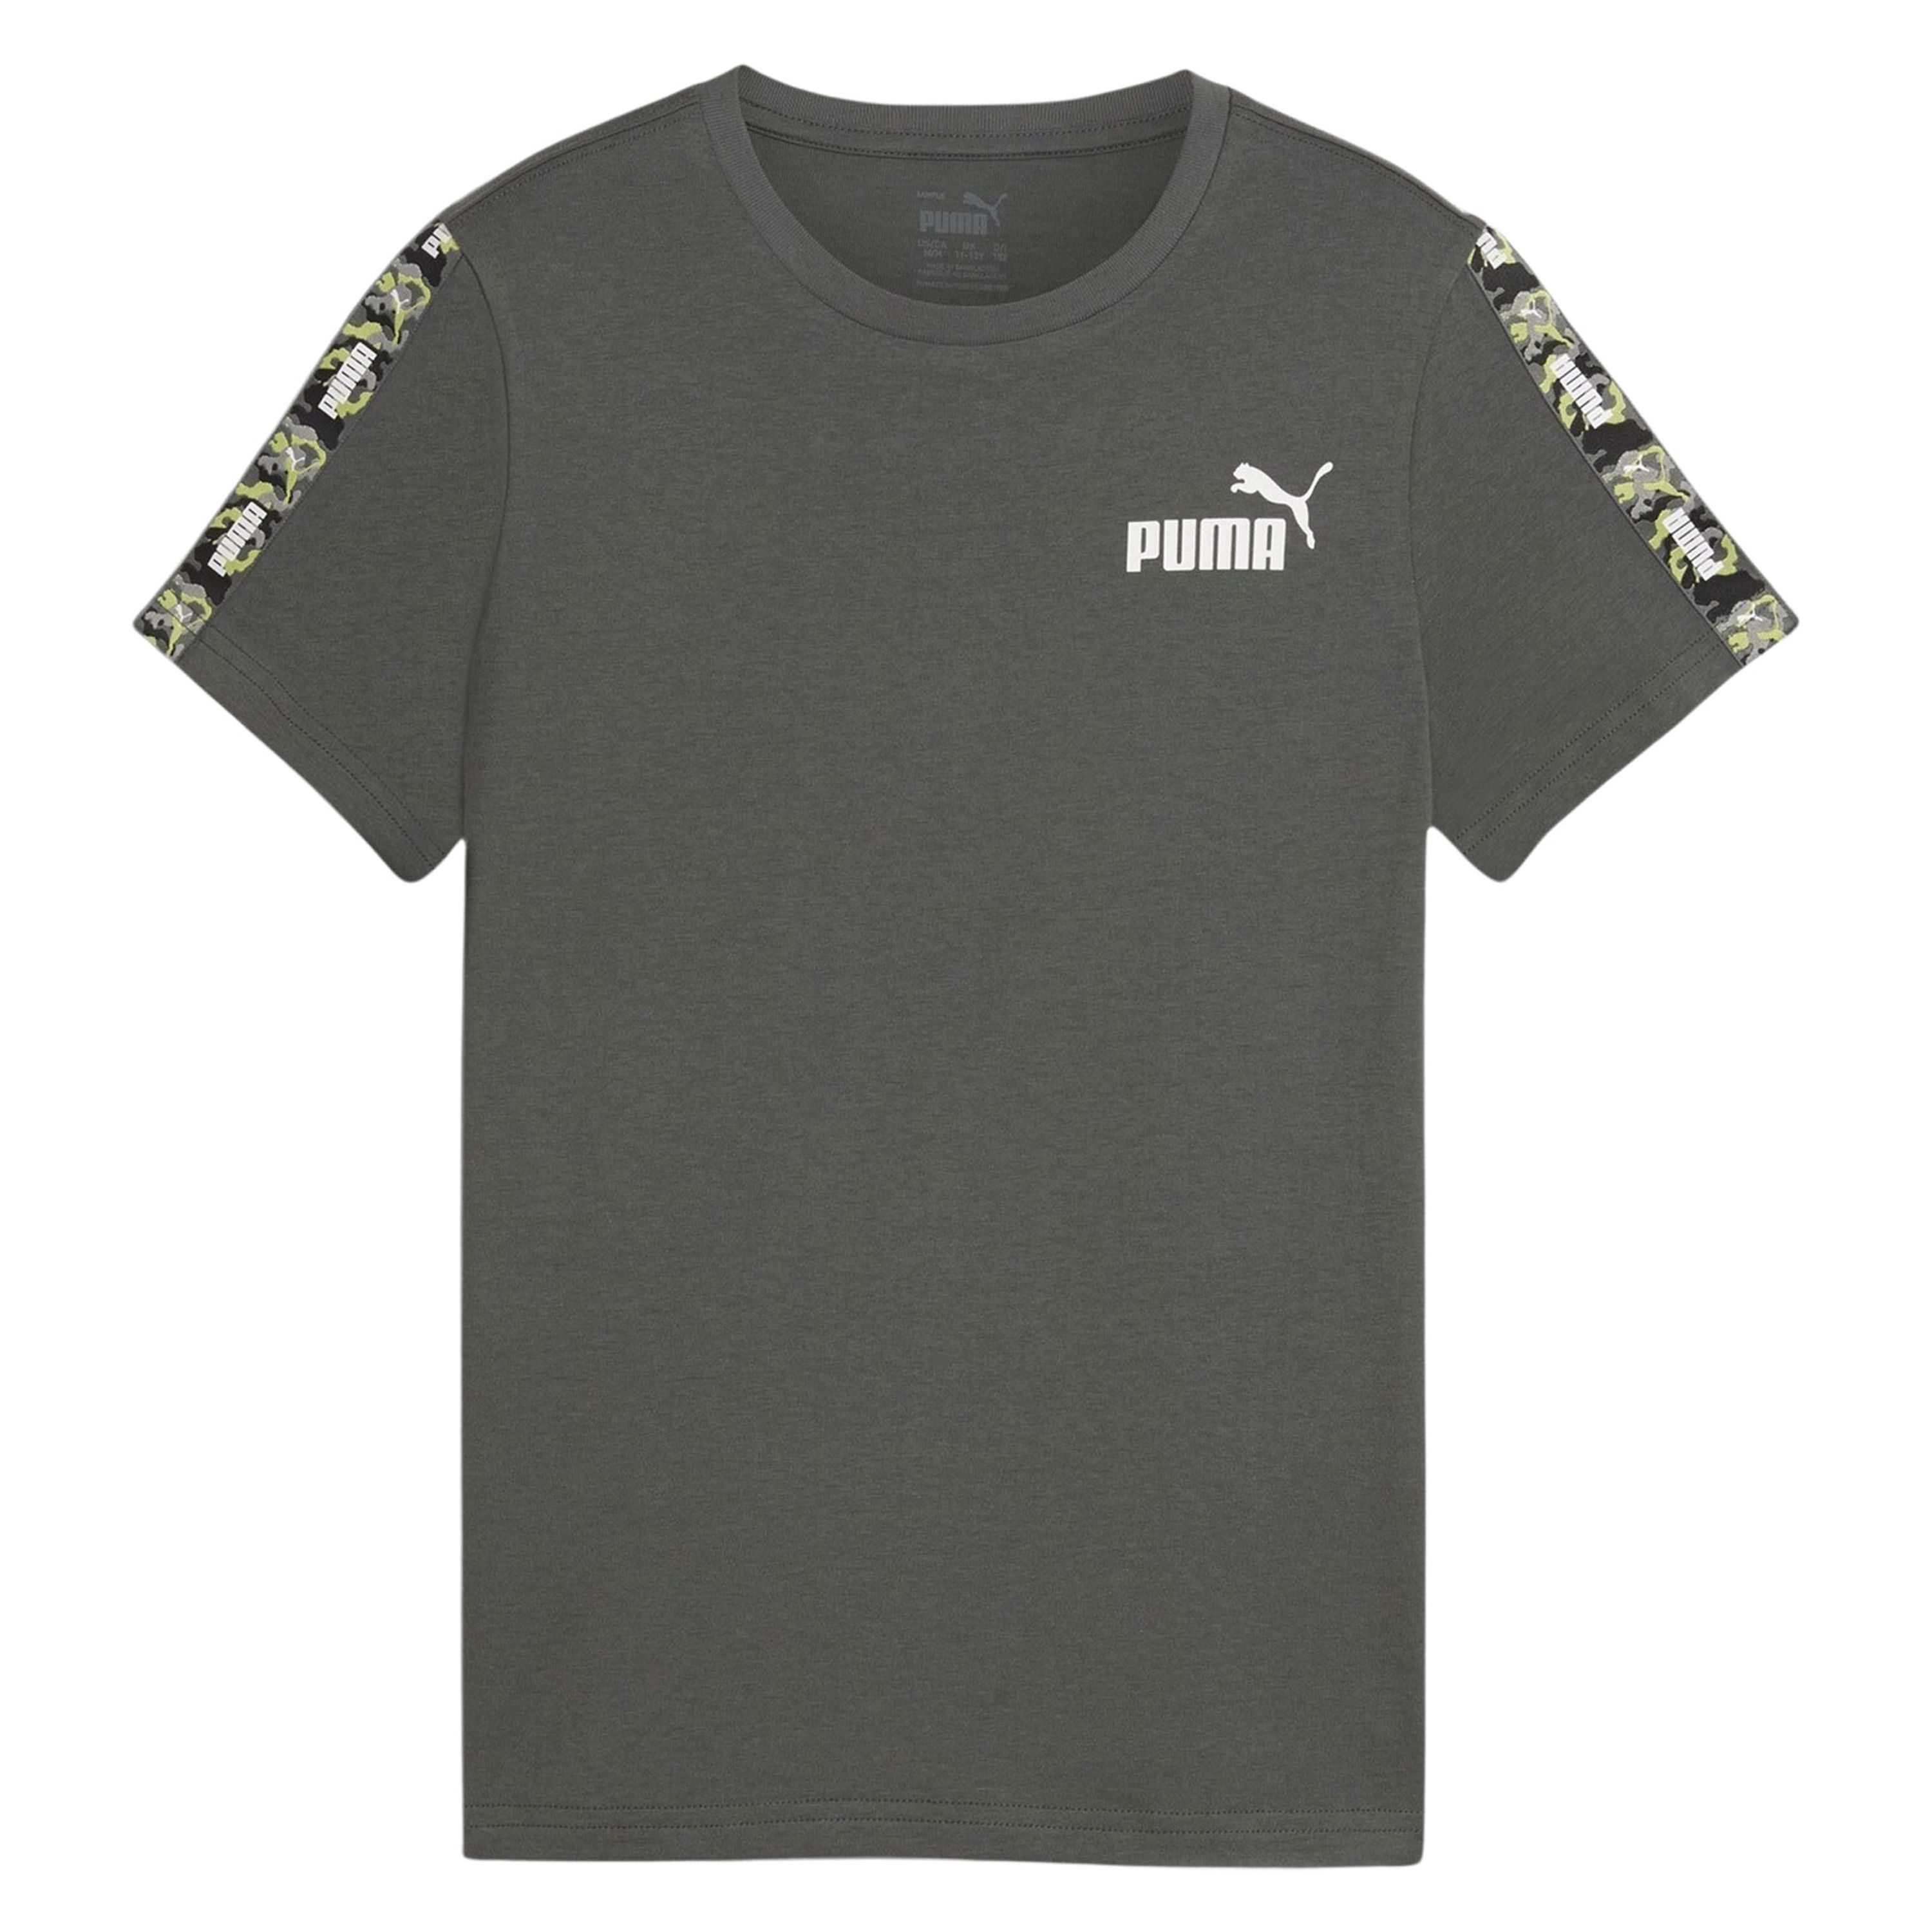 Puma T-shirt Ess Tape Camo grijs Katoen Ronde hals Camouflage 164